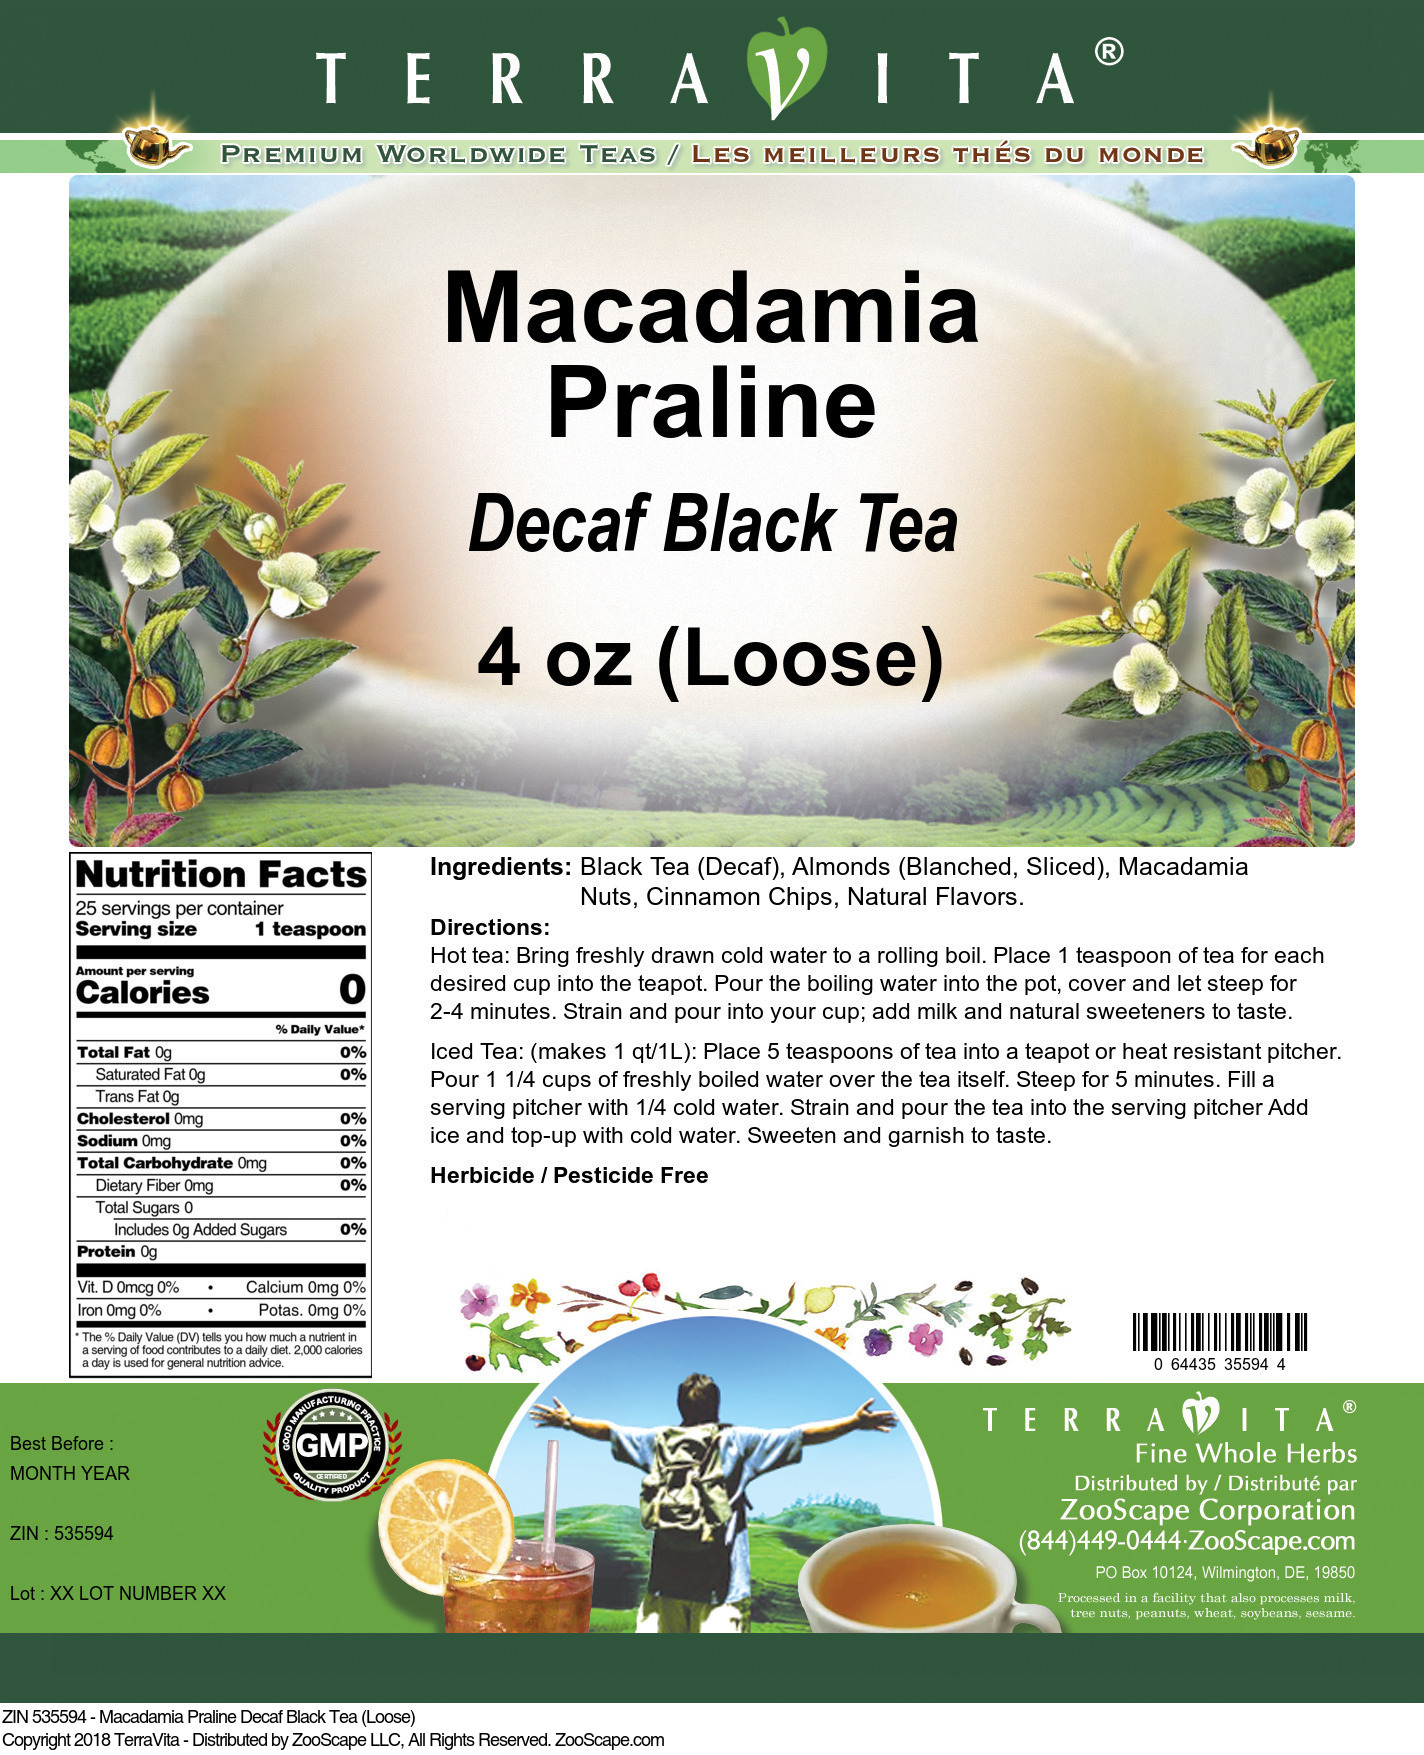 Macadamia Praline Decaf Black Tea (Loose) - Label